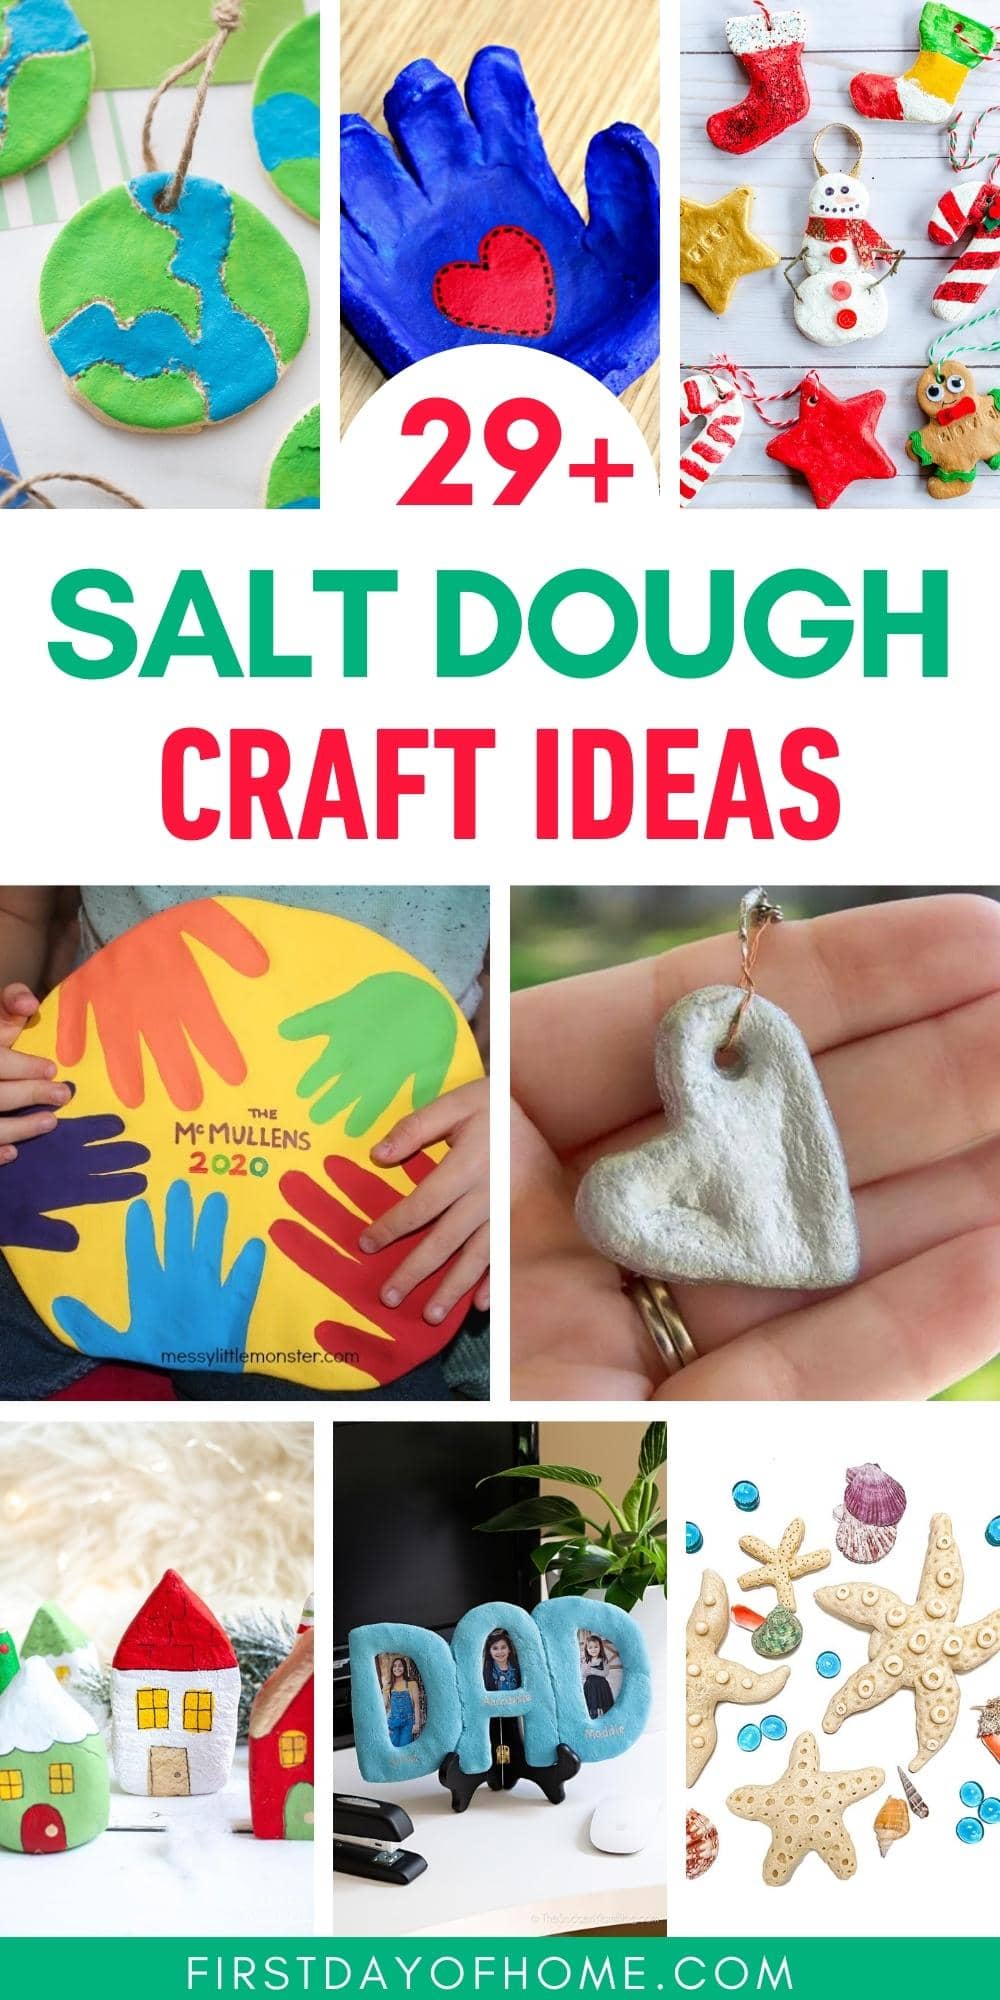 Collage of salt dough crafts, including DIY ornaments, handprint keepsakes, and pendants. Text overlay reads "29+ Salt Dough Craft Ideas".